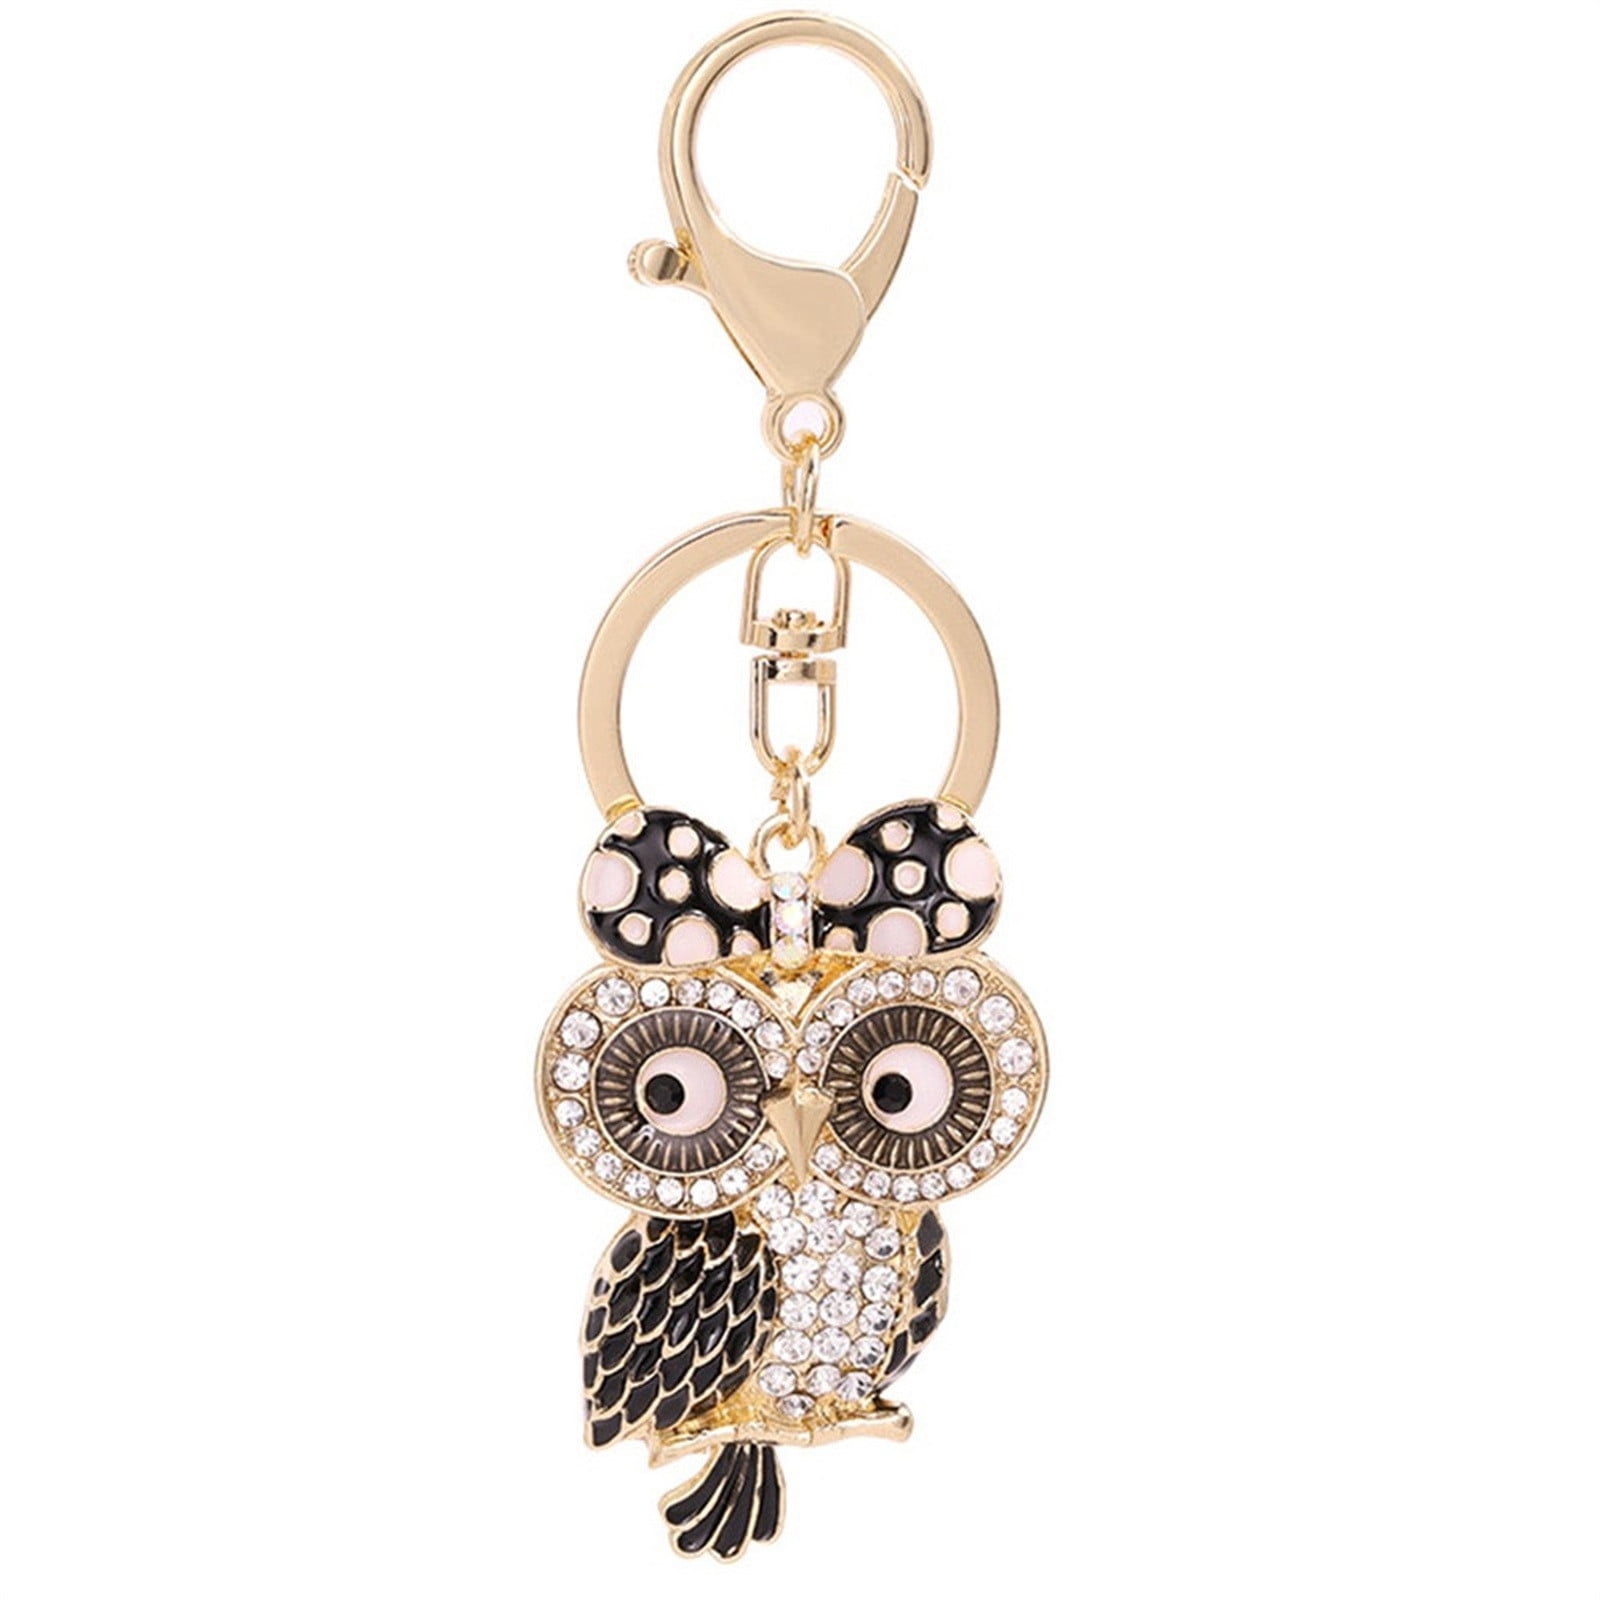 WQQZJJ Keychain, Beautiful Owl Rhinestone Key Chain Crystal Purse Keychain  Bag Key Ring Jewelry Clearance on Deals - Walmart.com